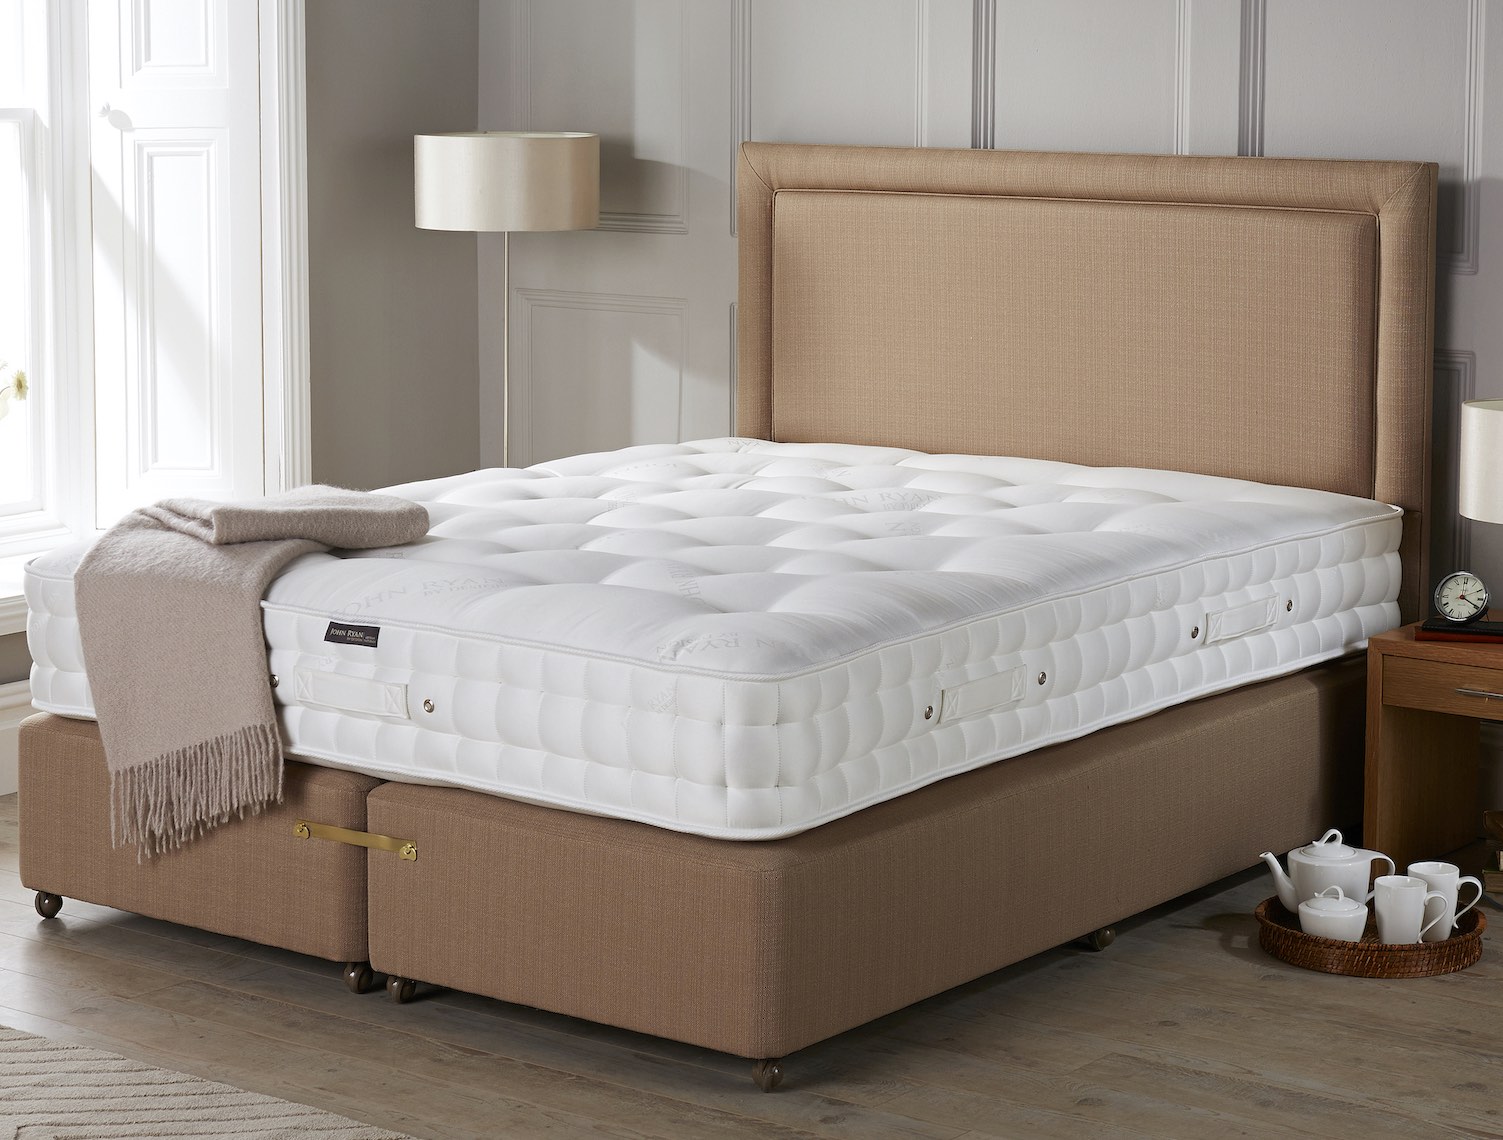 Artisan Naturals pocket sprung mattress in a bright room